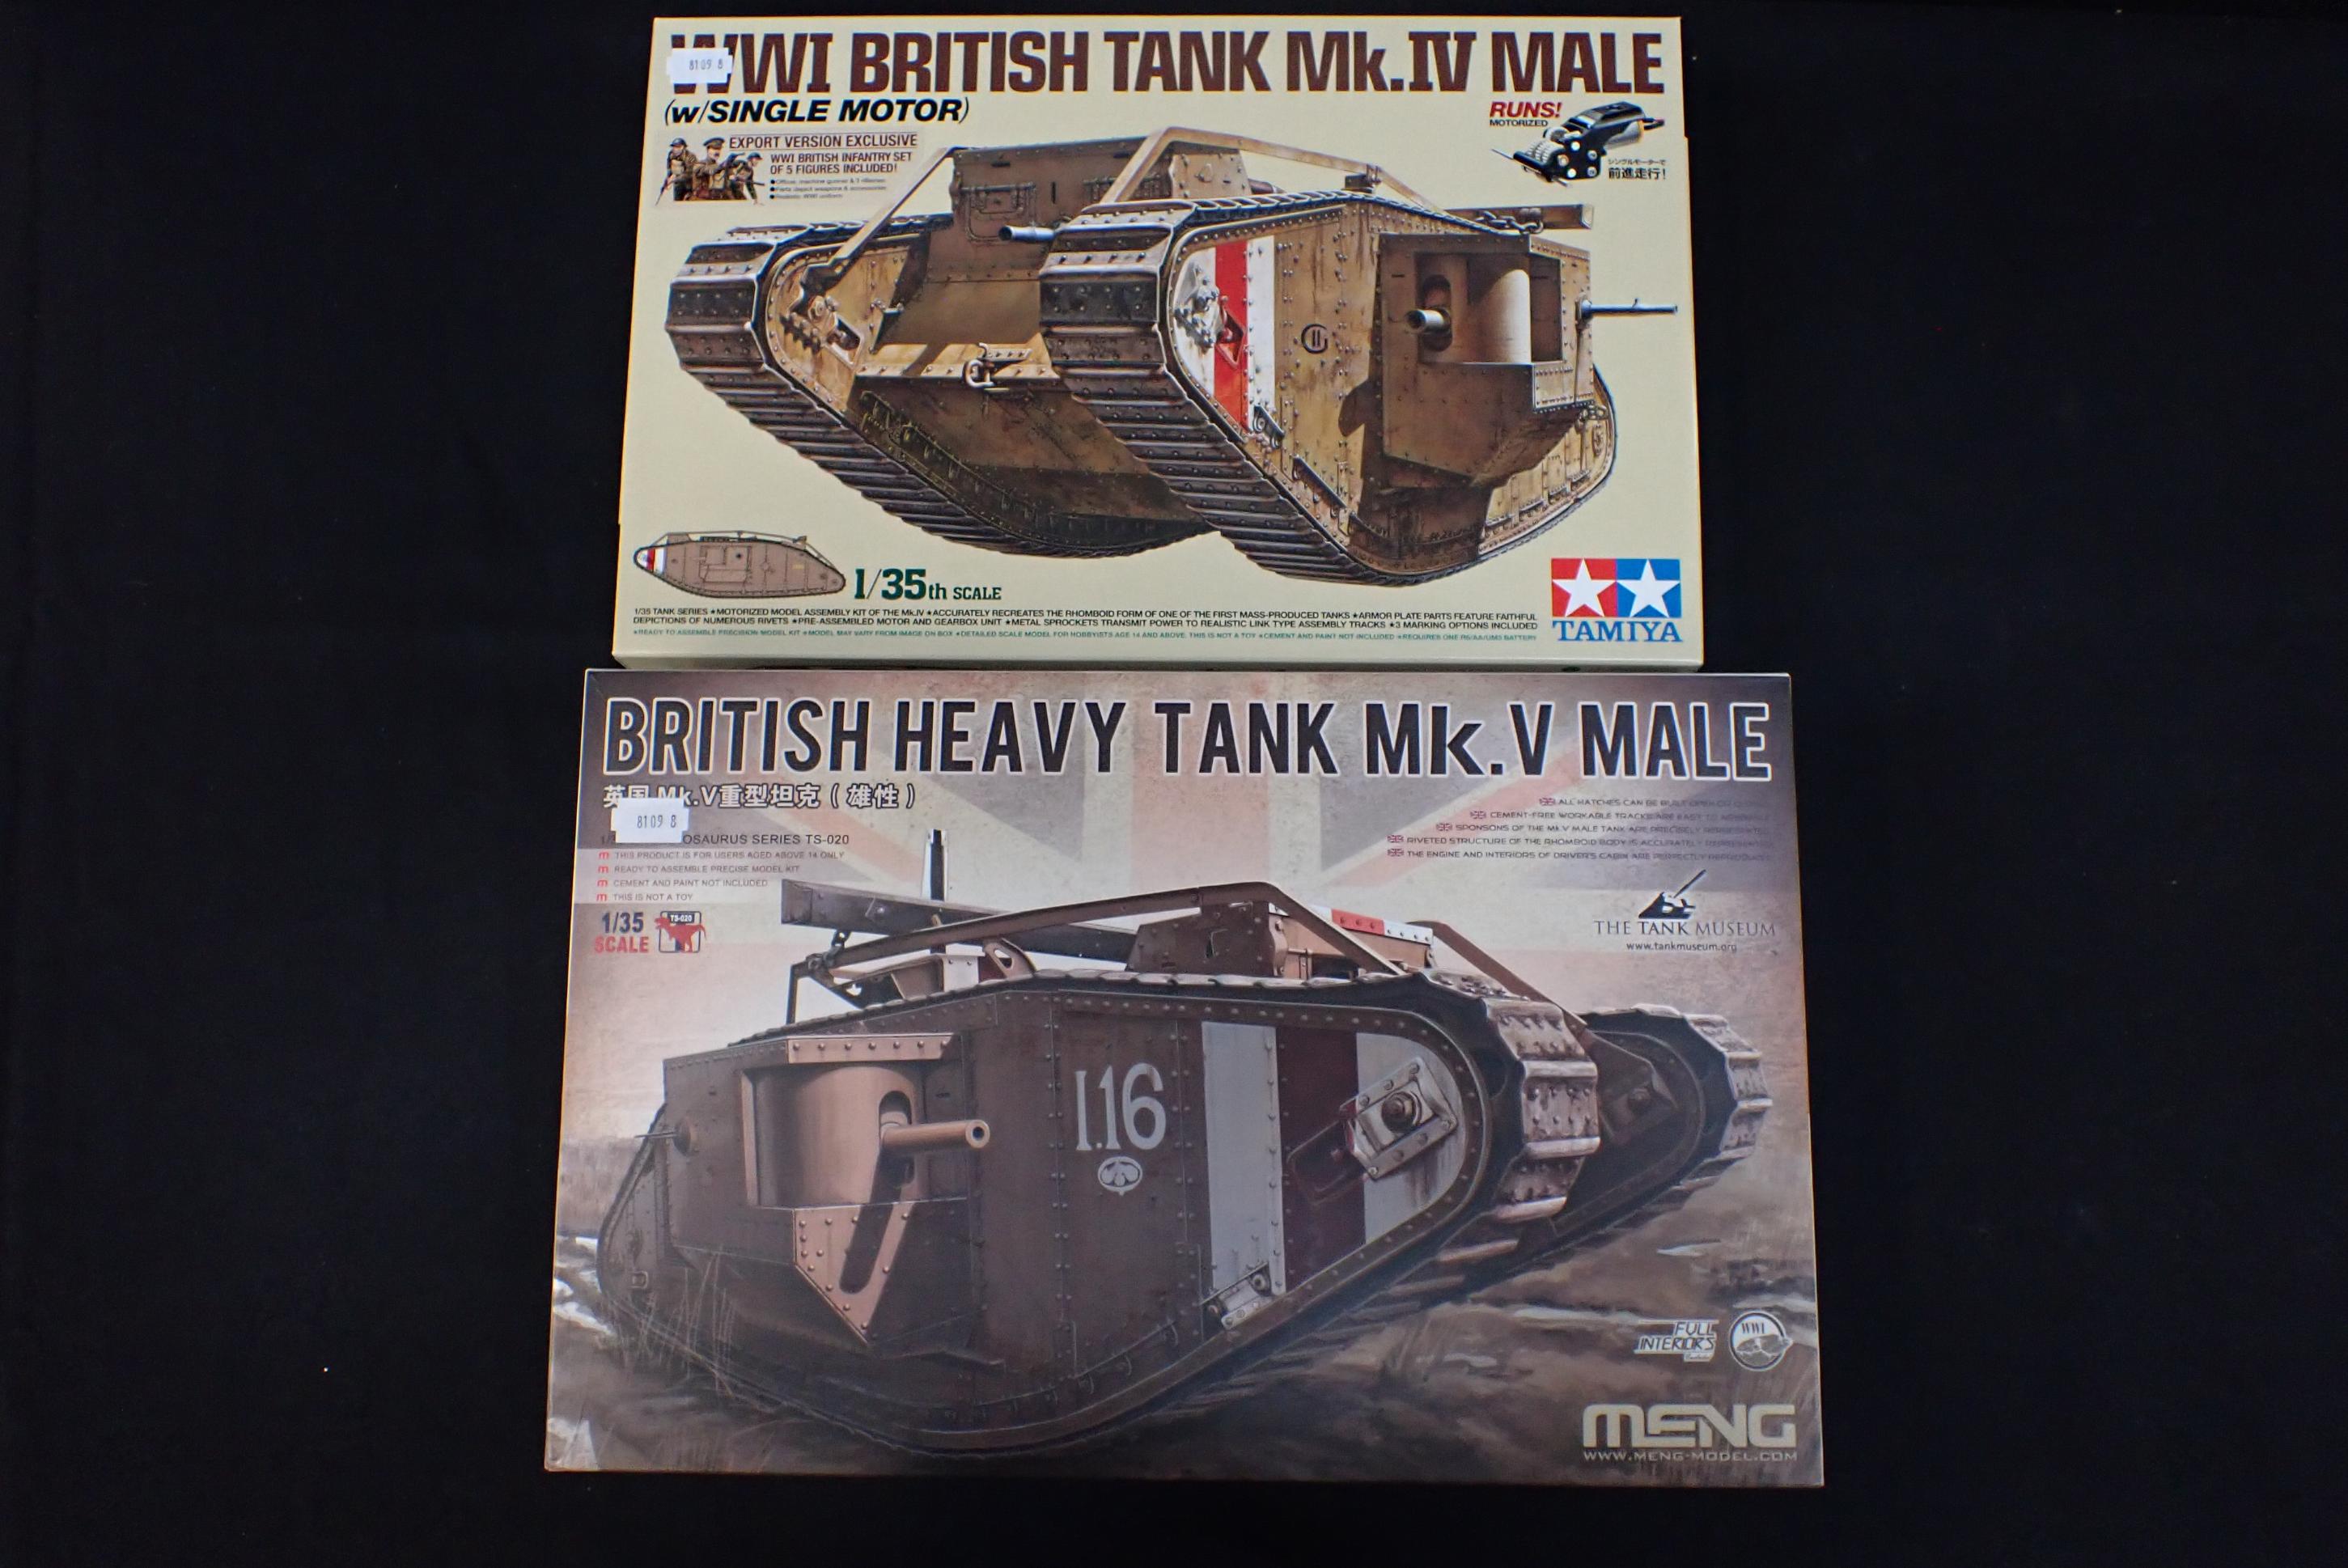 TAMIYA MODEL KIT WWI BRITISH TANK Mk.IV MALE, MOTORIZED. SET INCLUDES 5 FIGURES OF WWI BRITISH INFAN